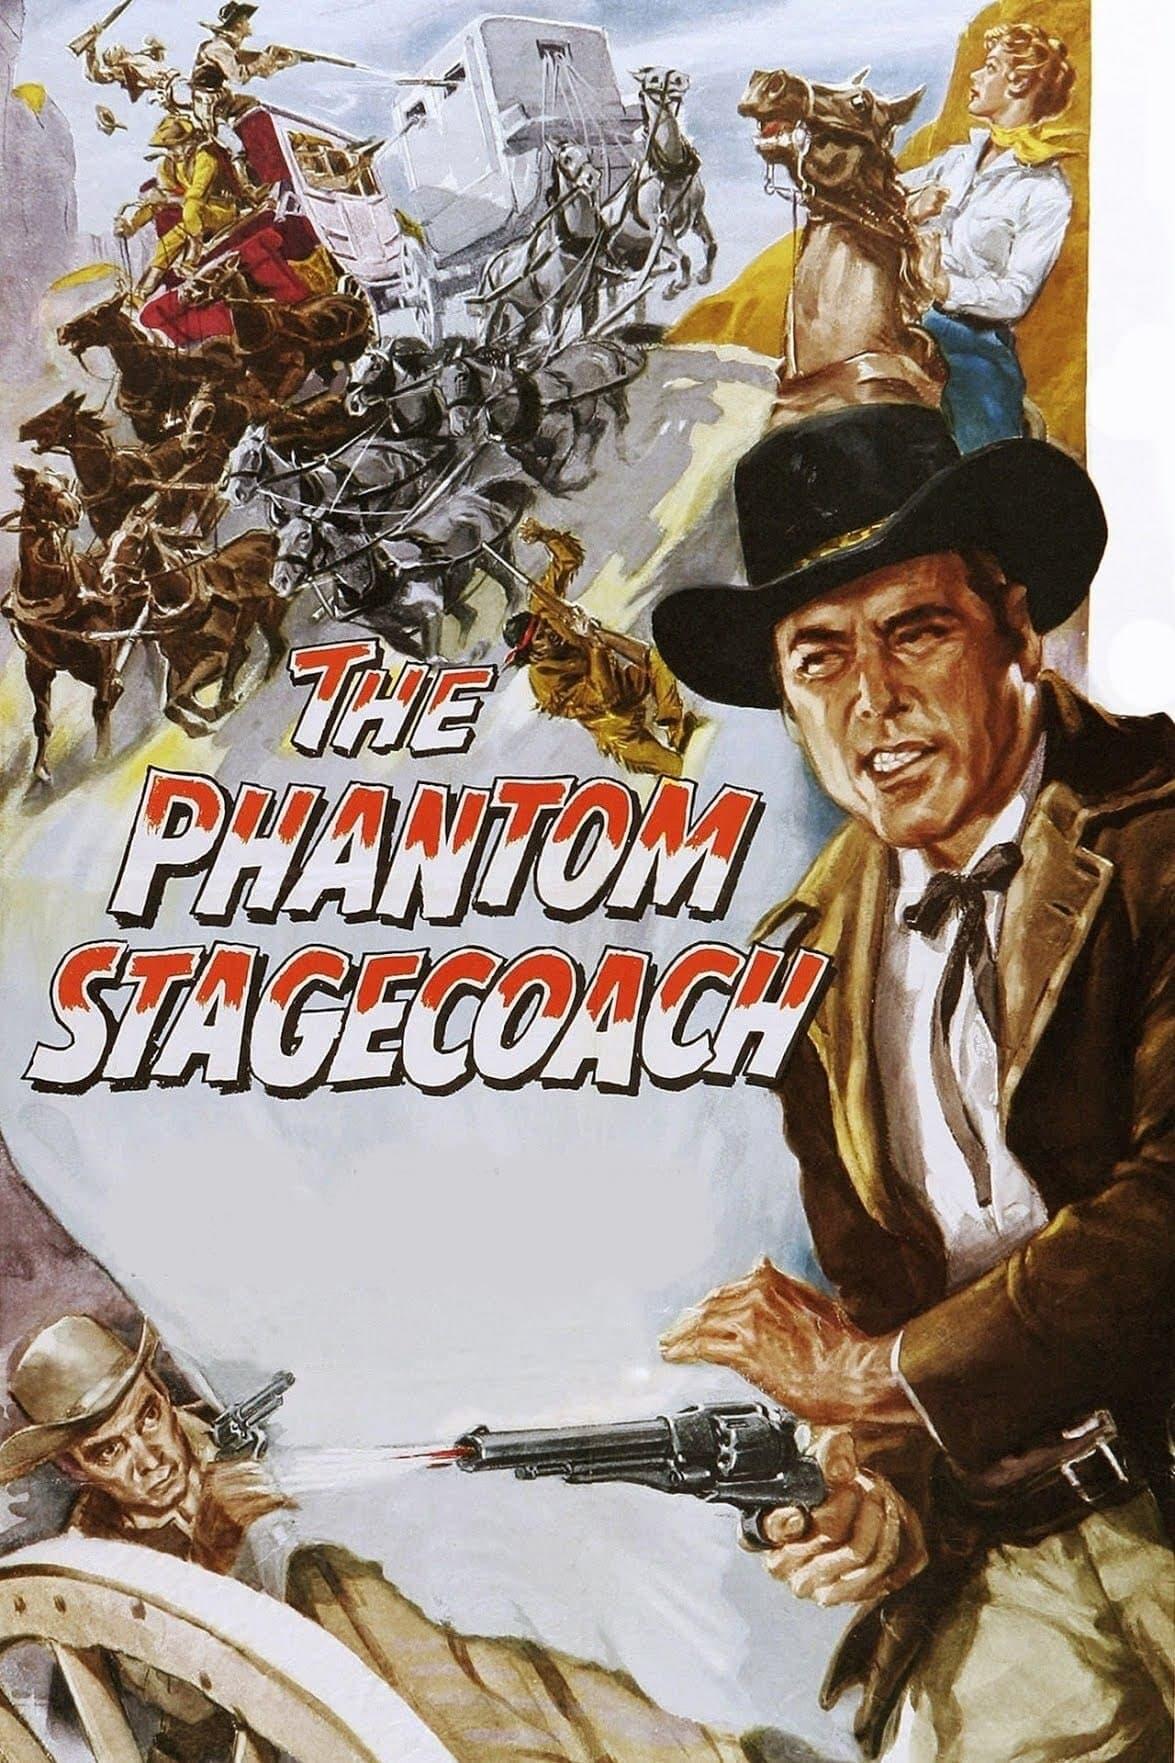 The Phantom Stagecoach poster